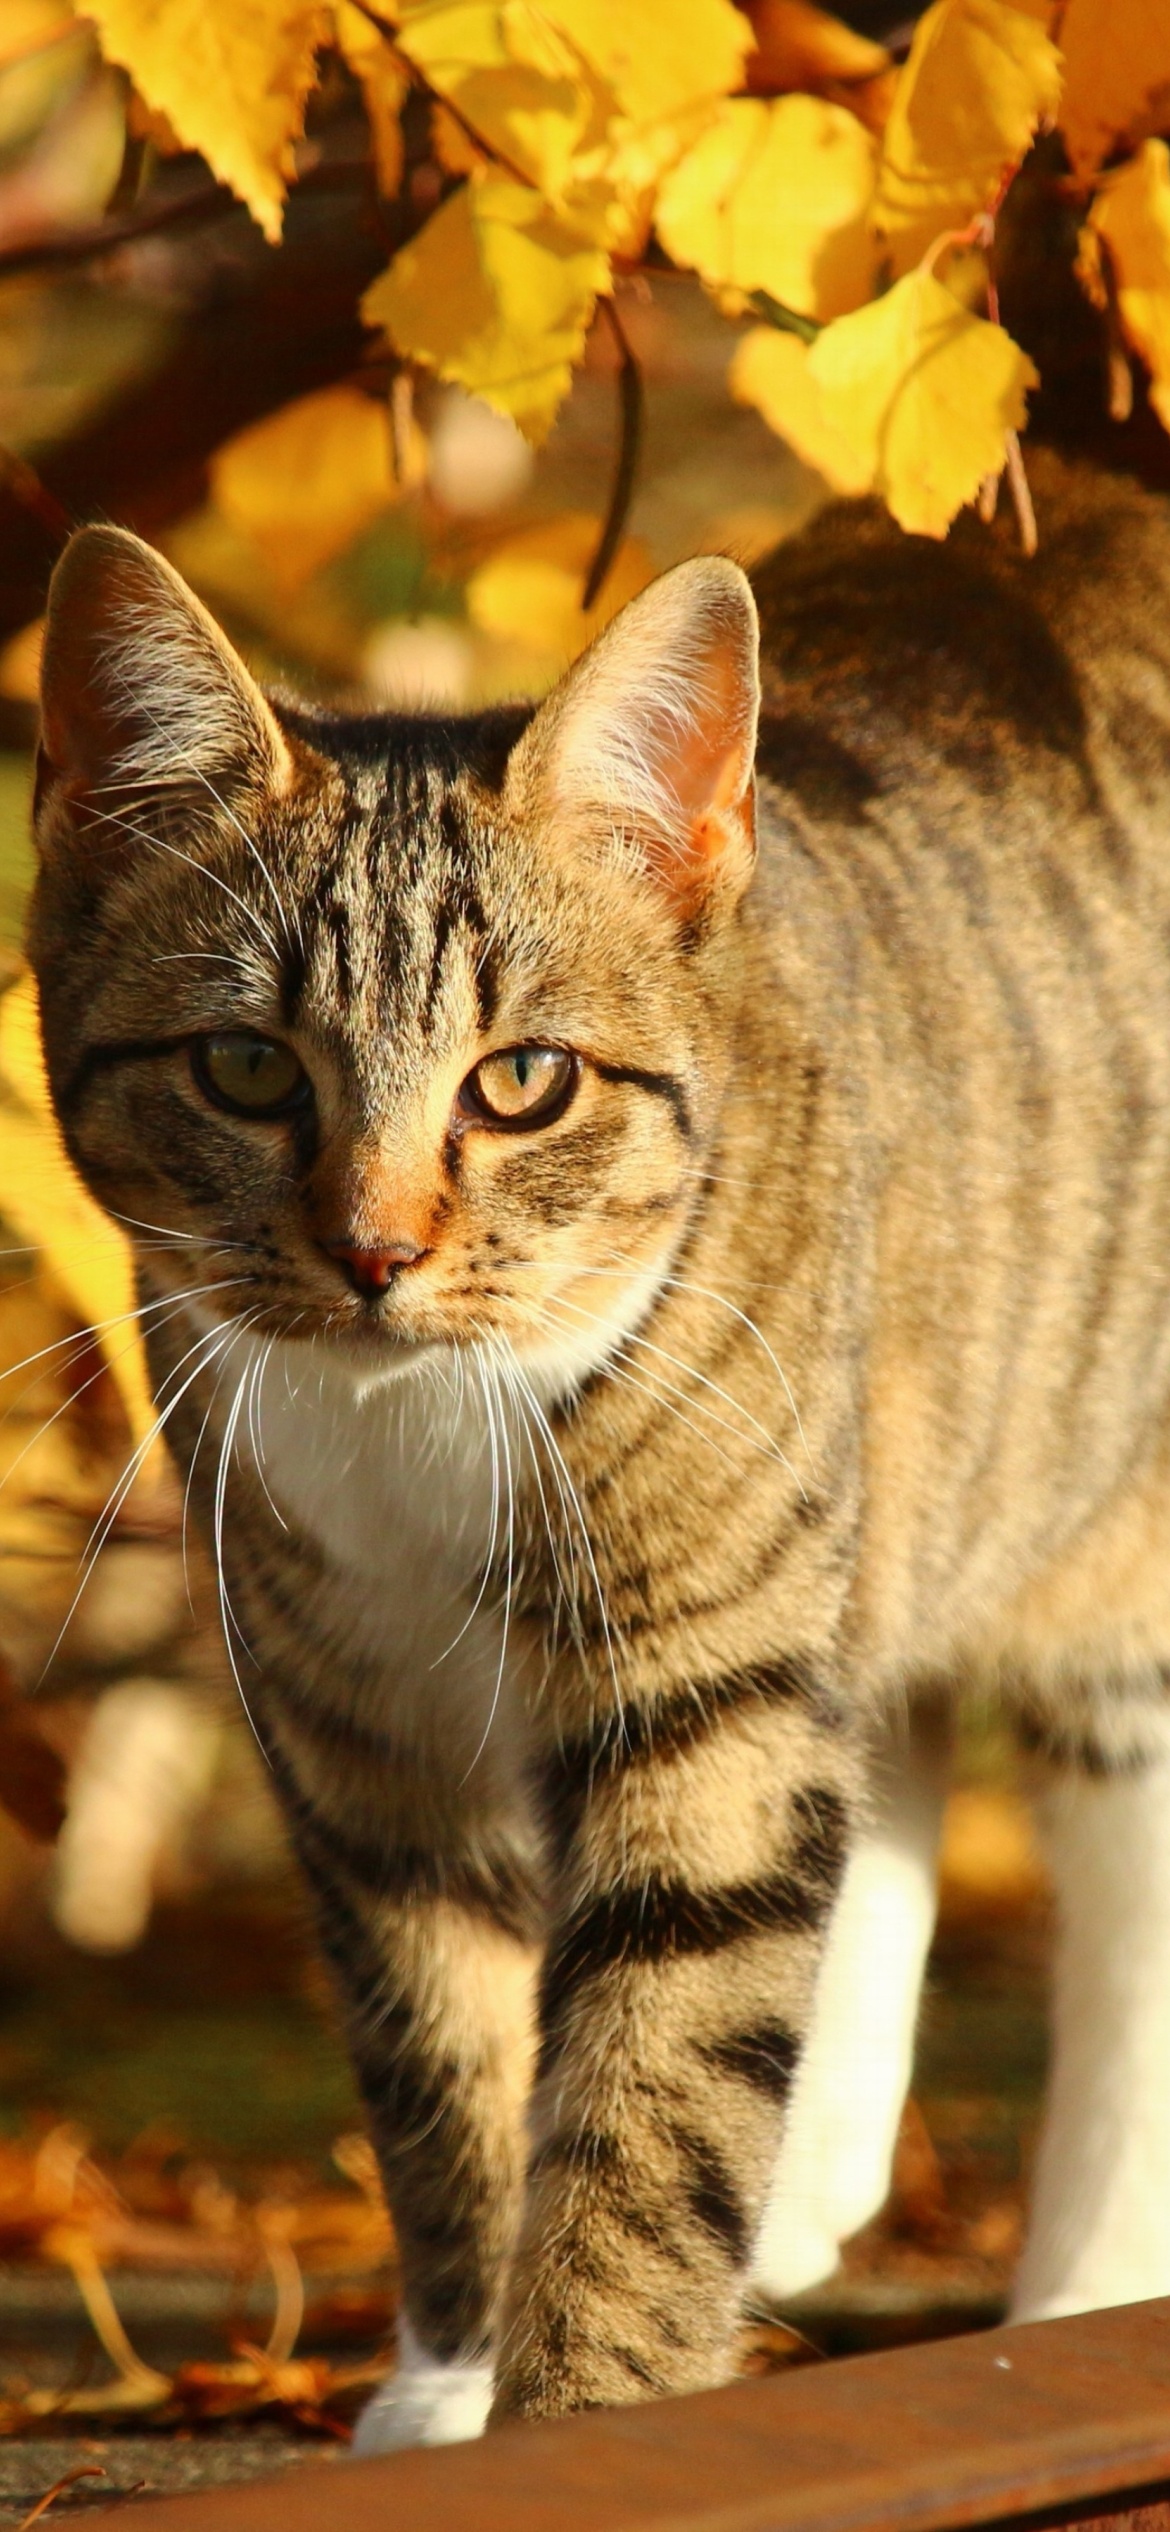 Обои Tabby cat in autumn garden 1170x2532